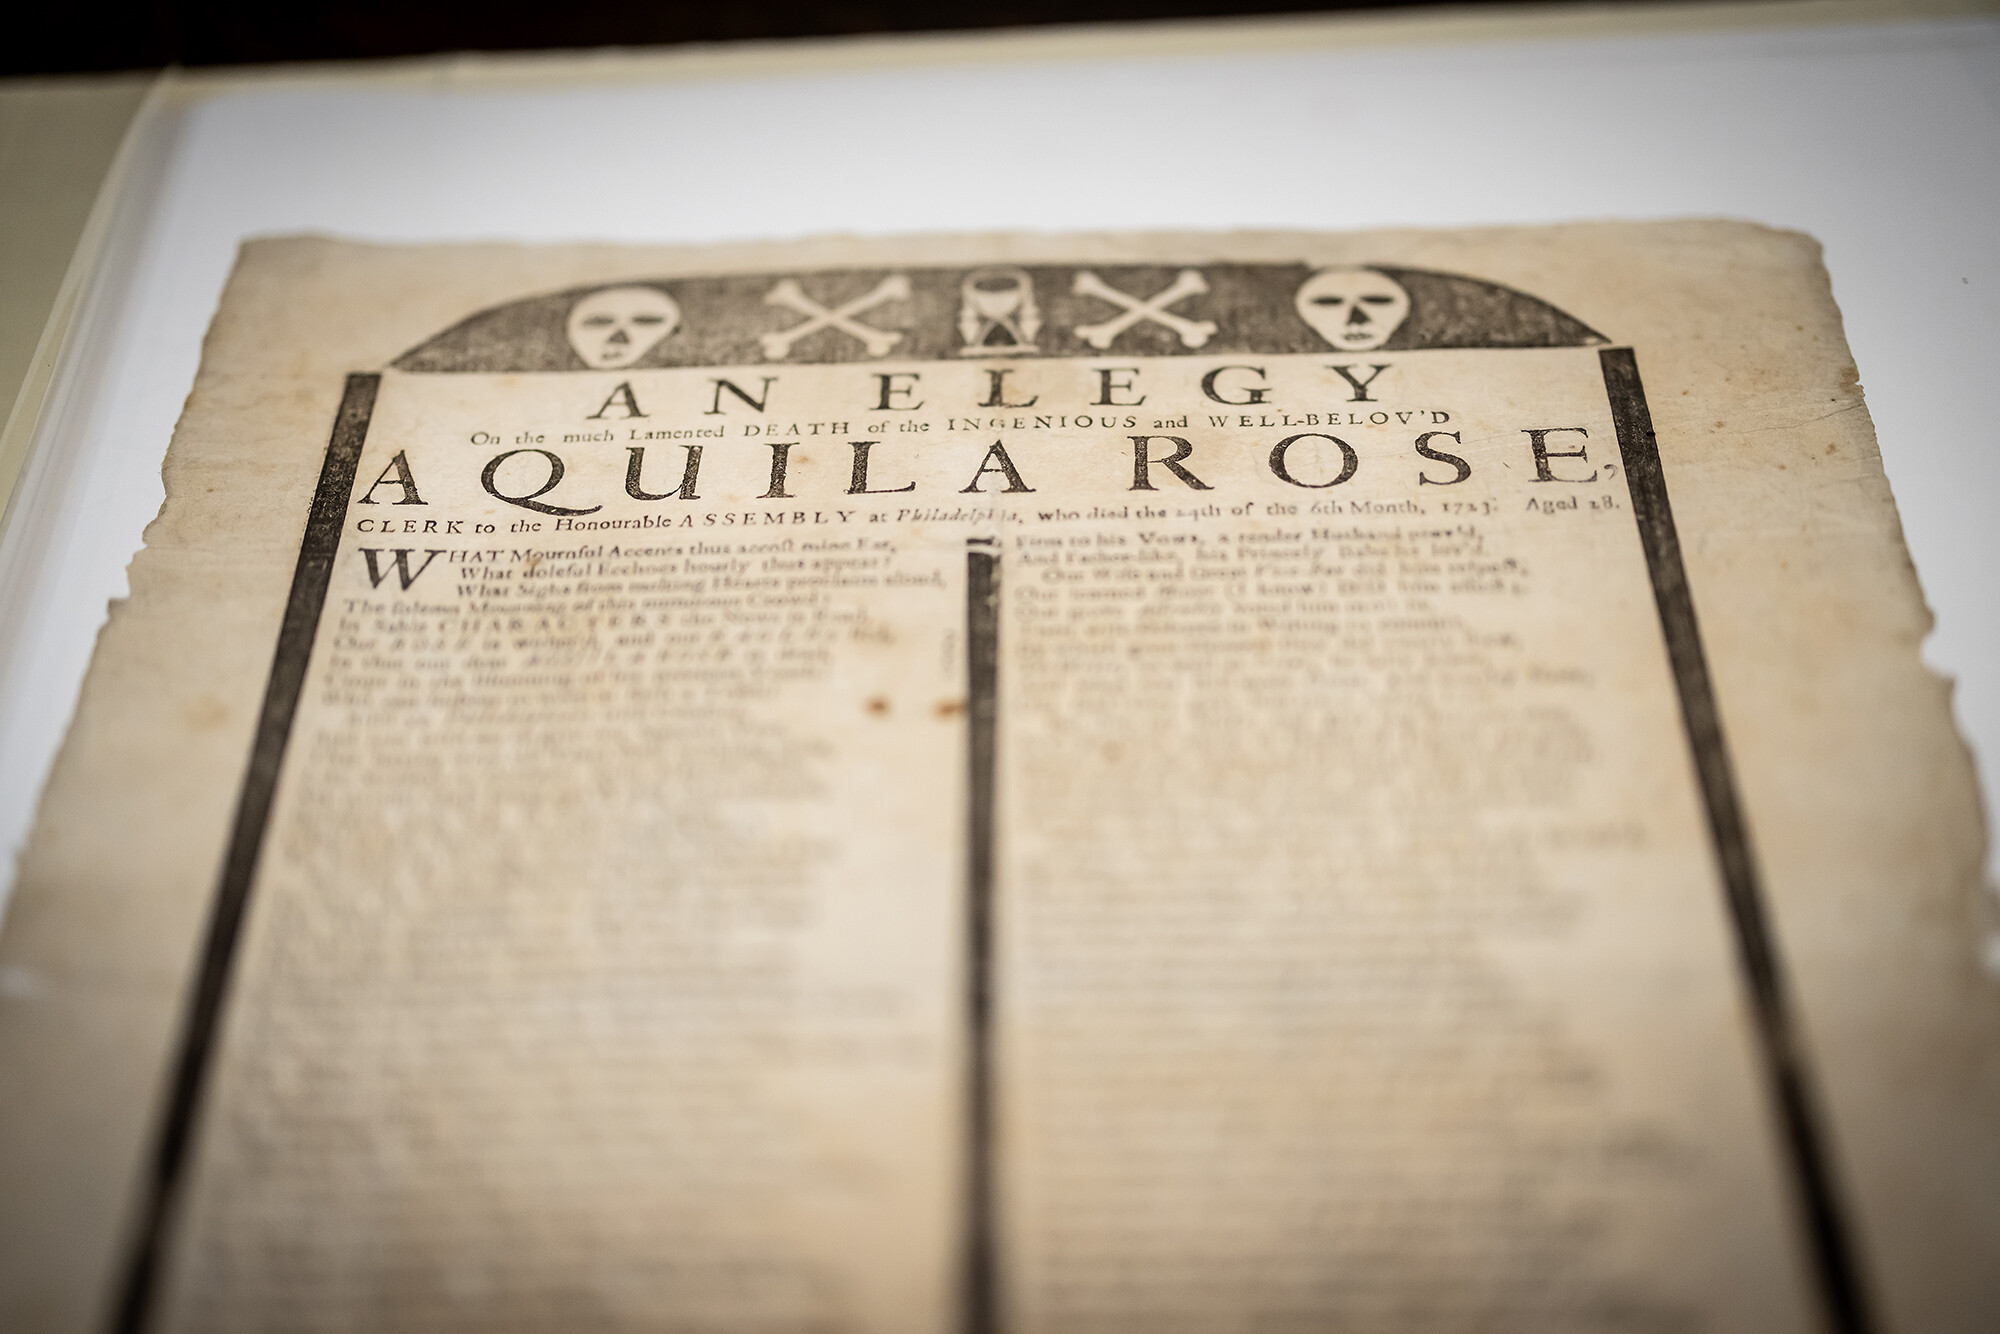 The historic Aquila Rose text.